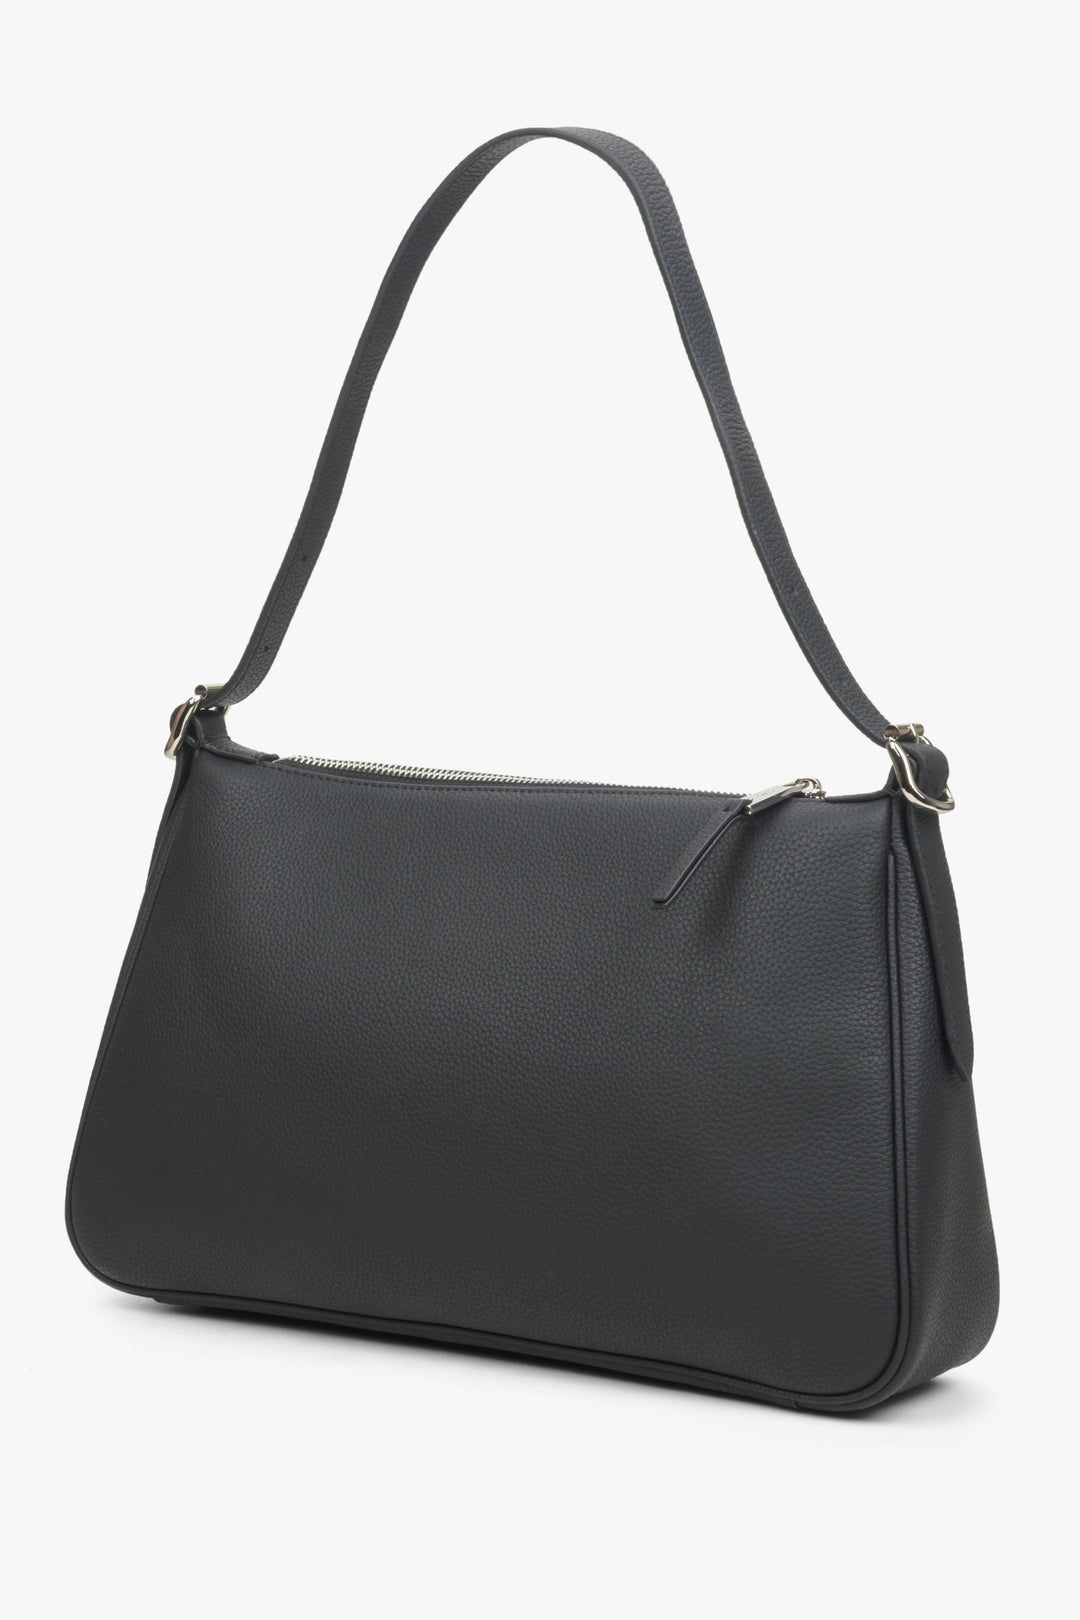 Women's shoulder bag made of genuine leather, black colour.